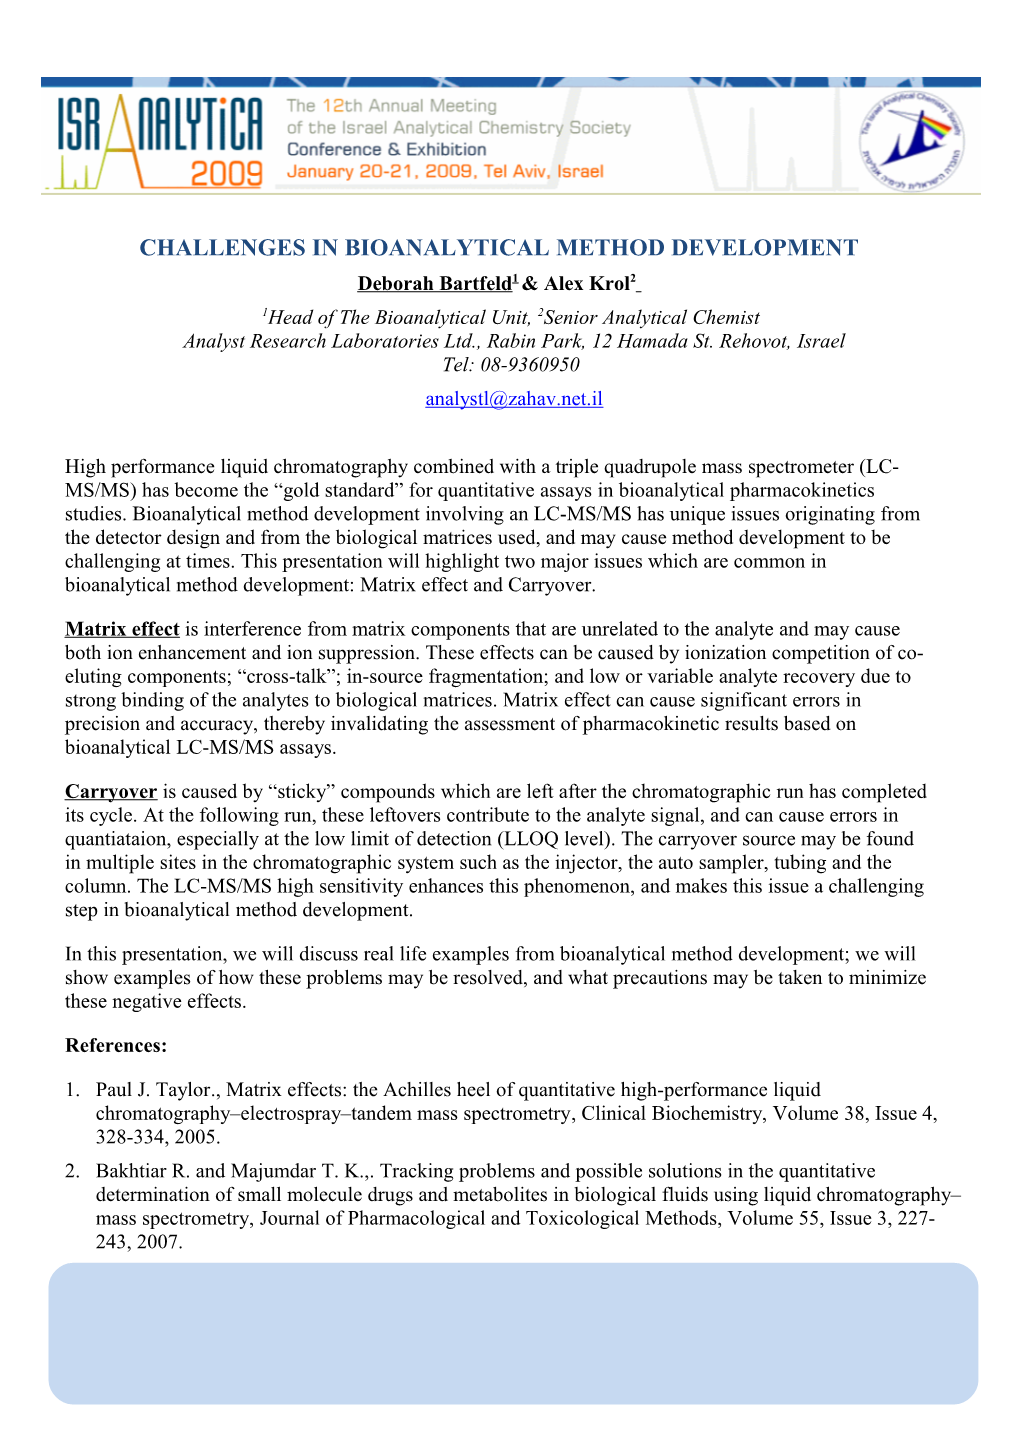 Challenges in Bioanalytical Method Development